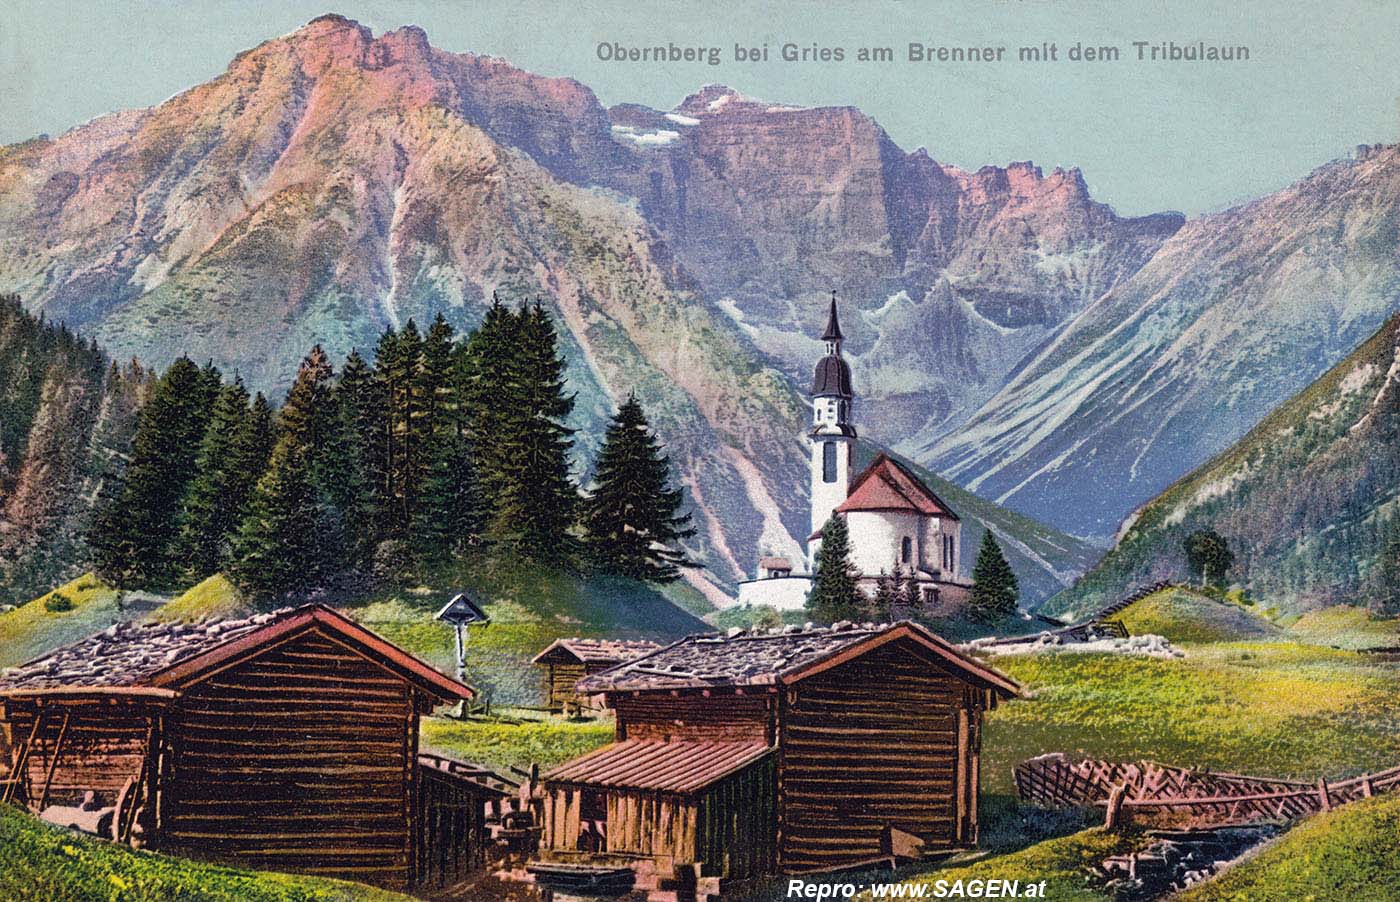 Obernberg am Brenner mit dem Tribulaun